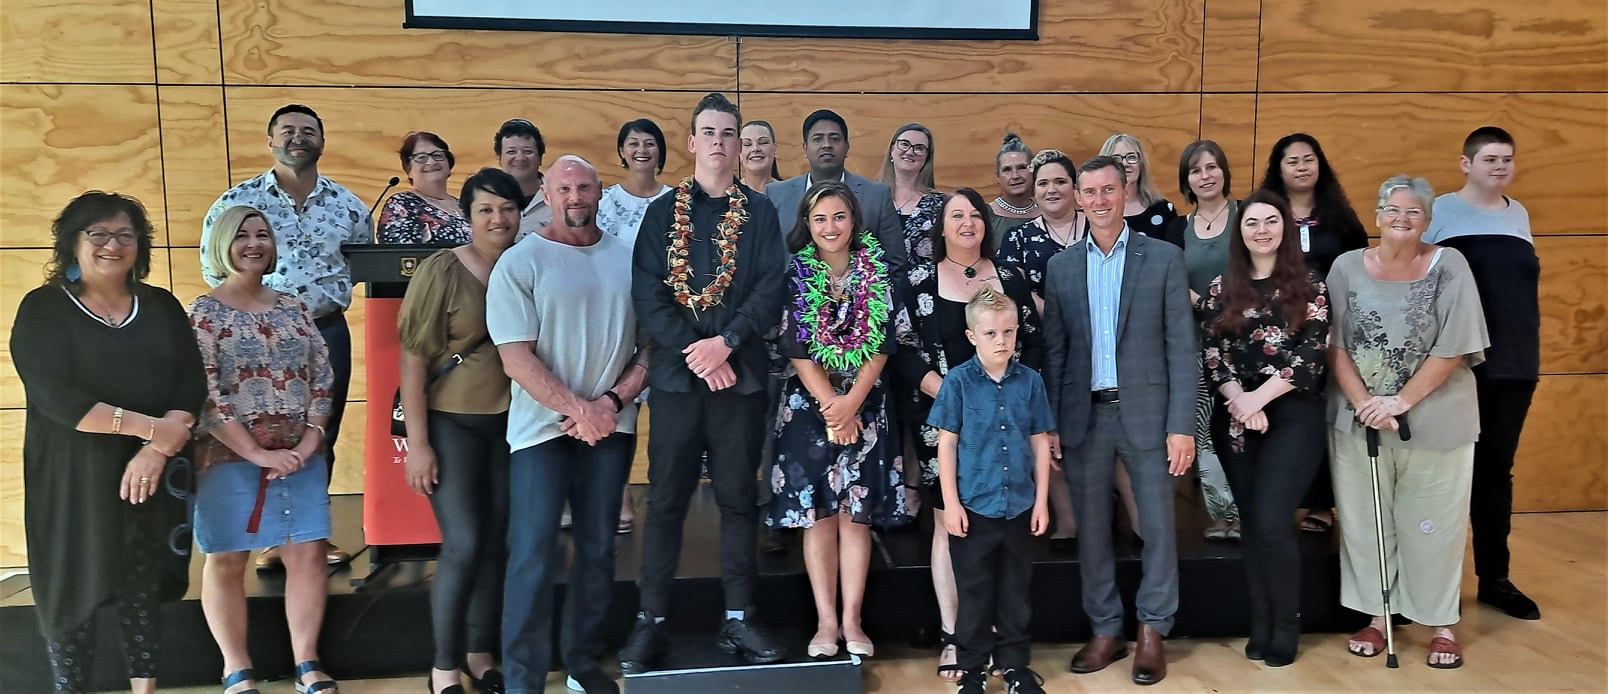 Friends whanau Oranga Tamariki kaimahi and community partners gather in celebration of Areta and Brody